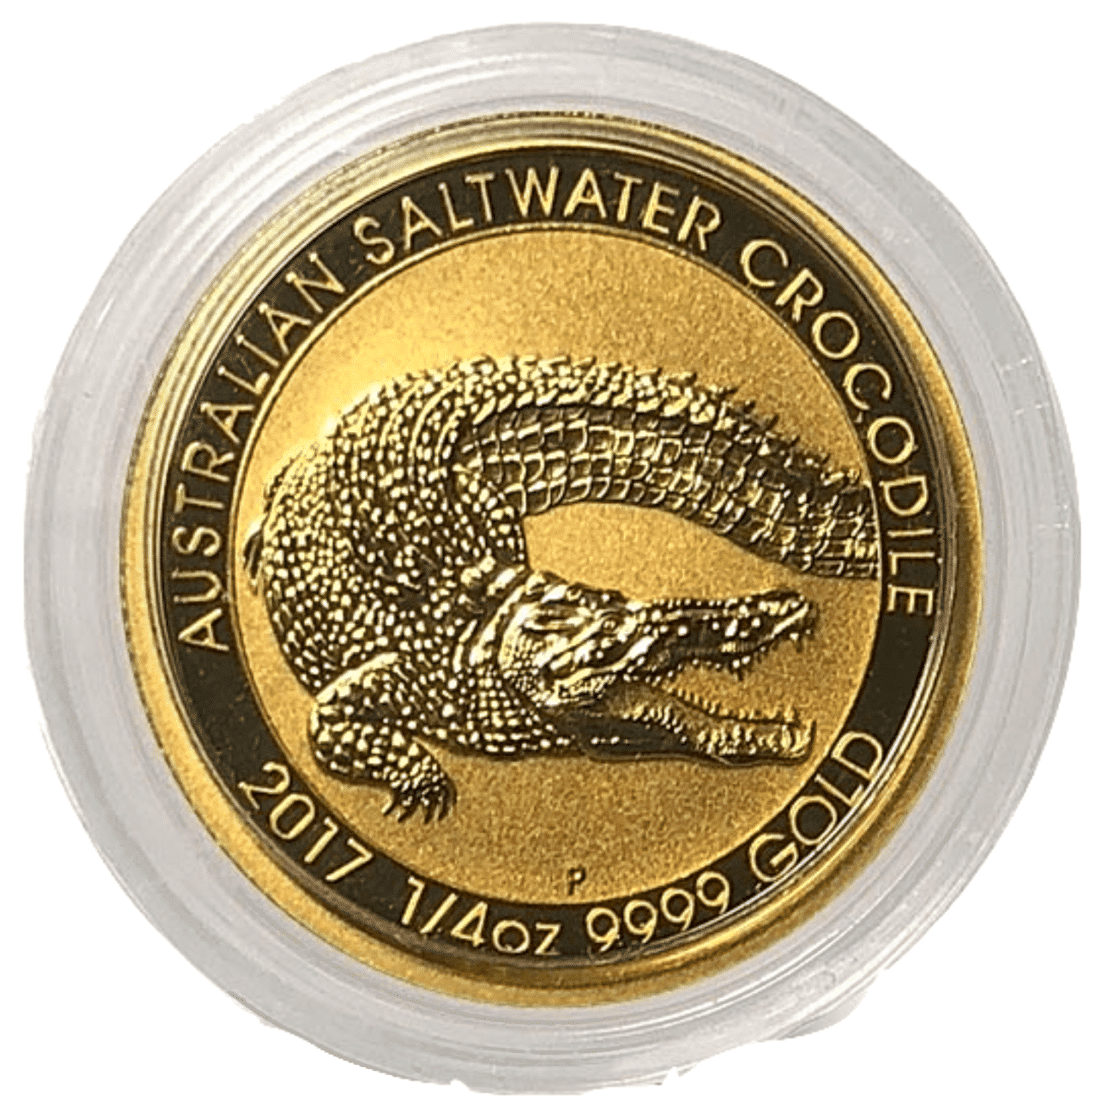 Saltwater crocodile 2017 1/4 ounce gold